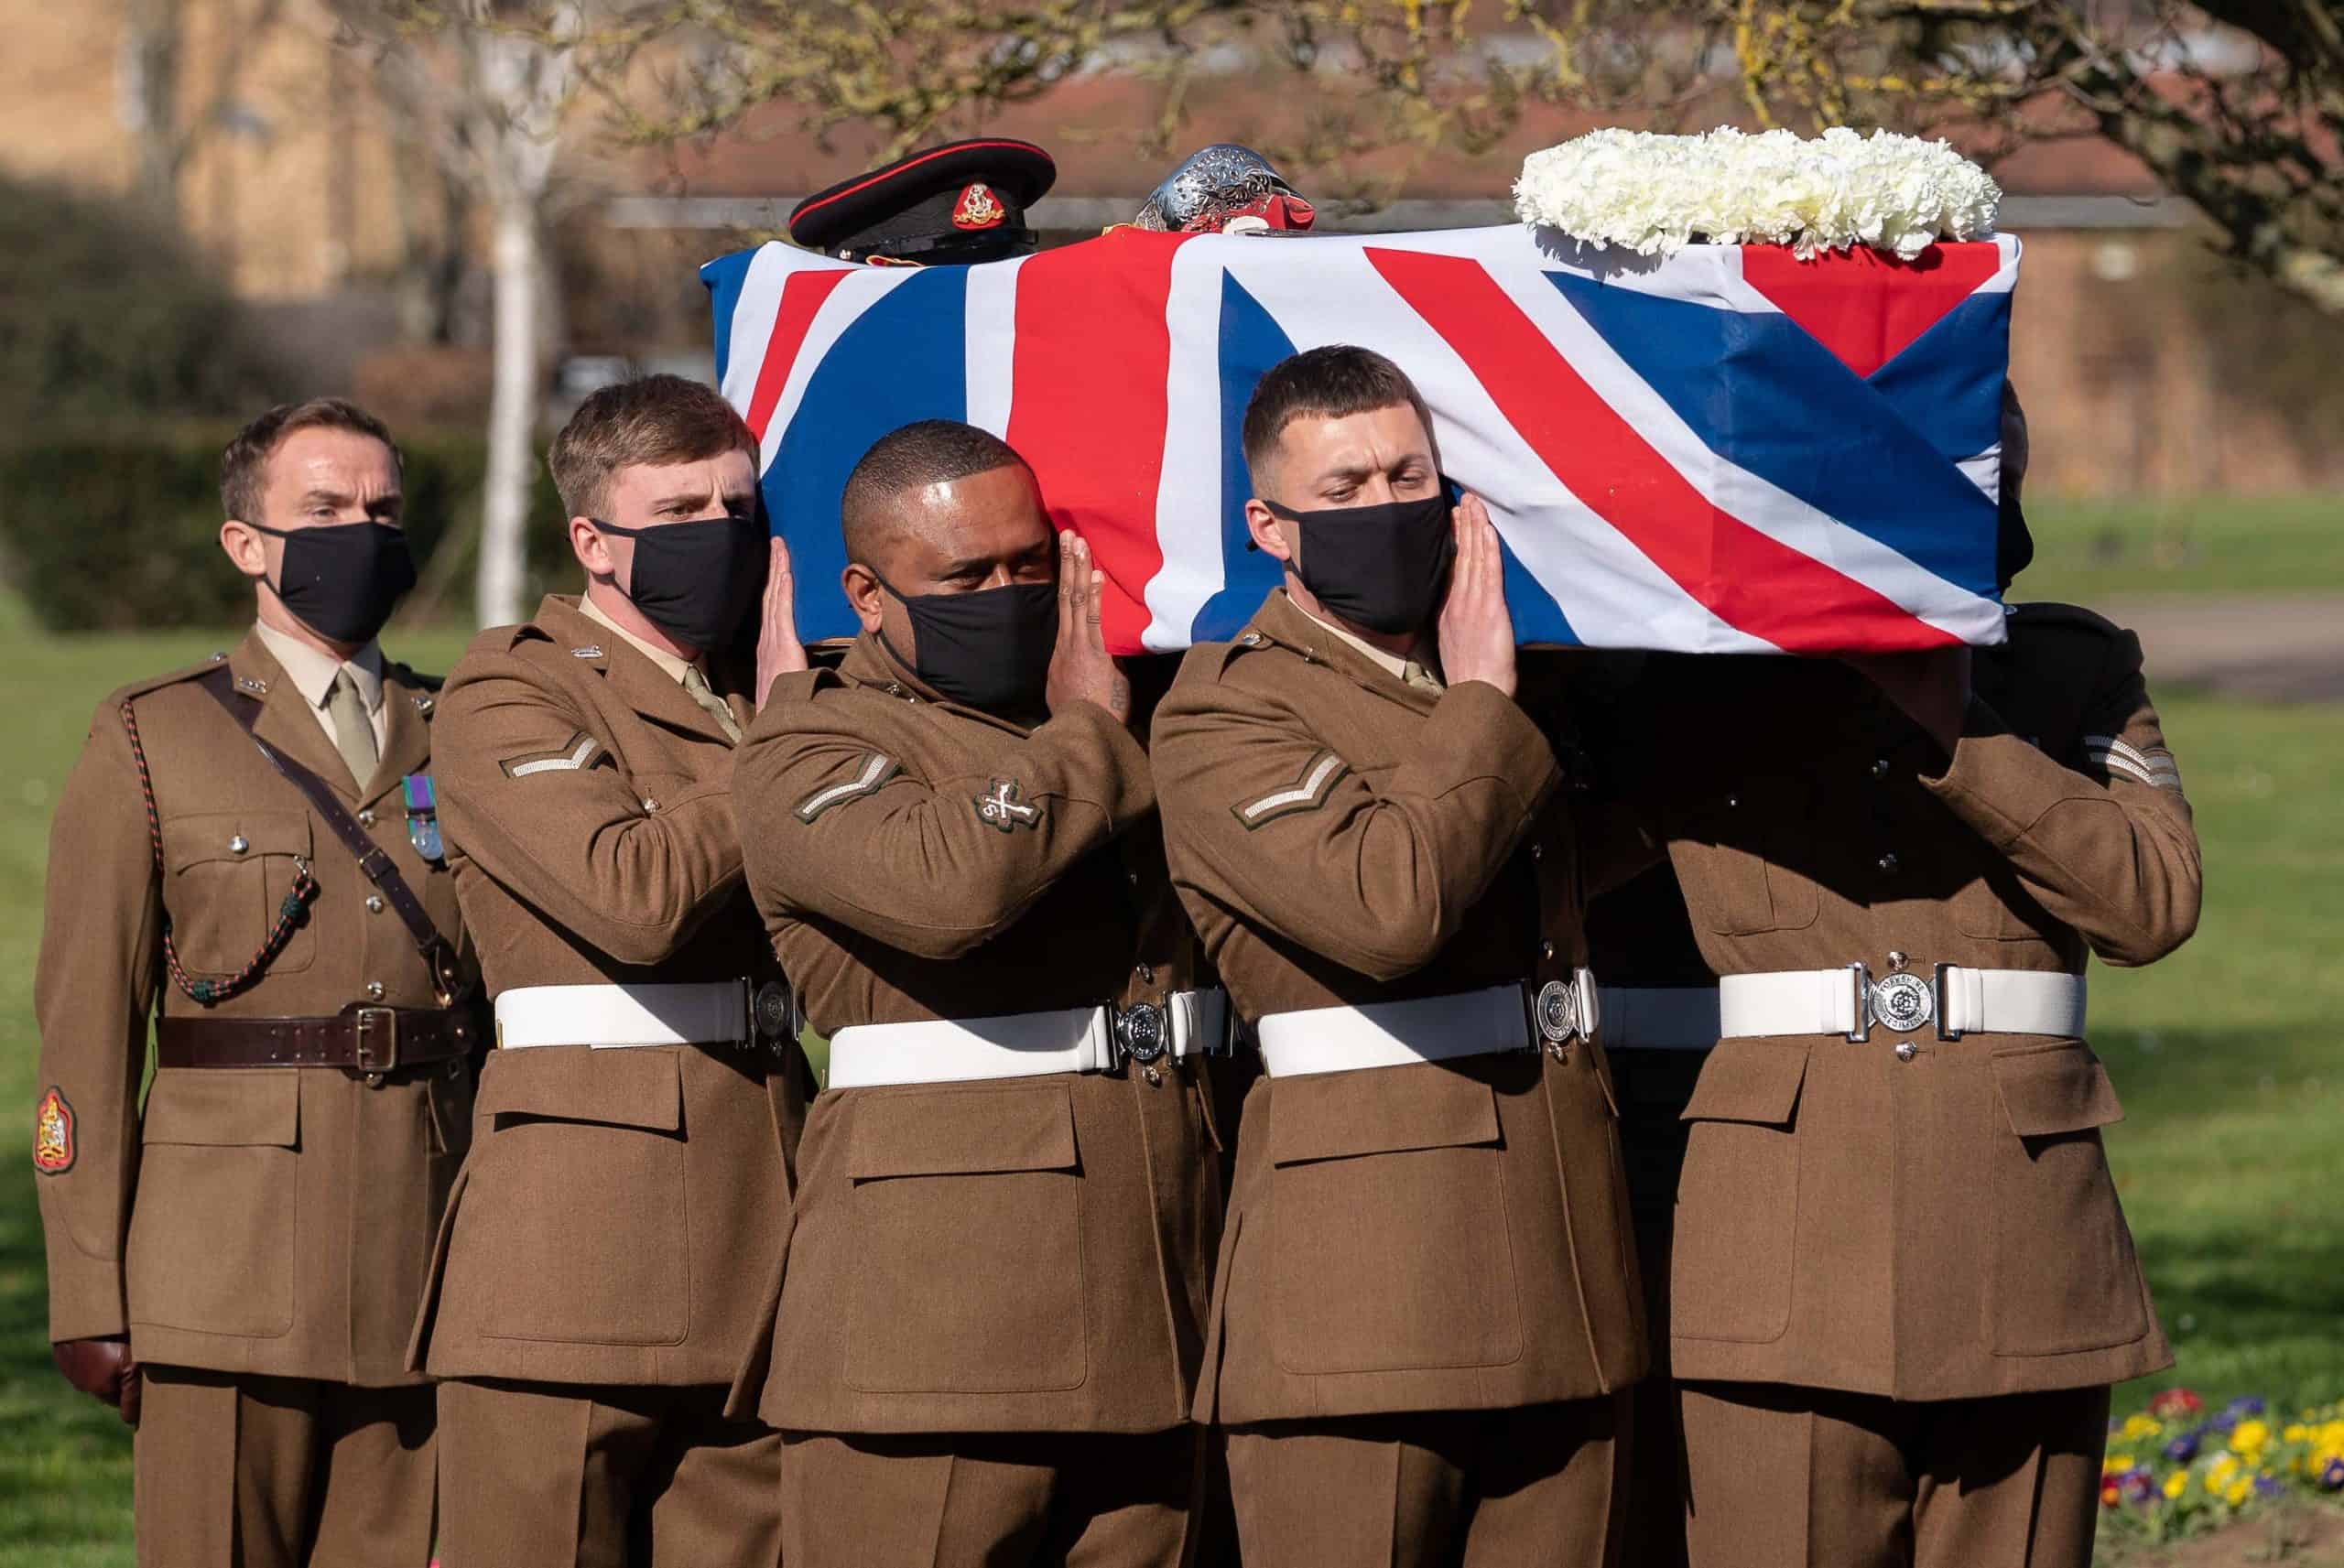 Captain Sir Tom Moore’s spirit lives on, family tells funeral service